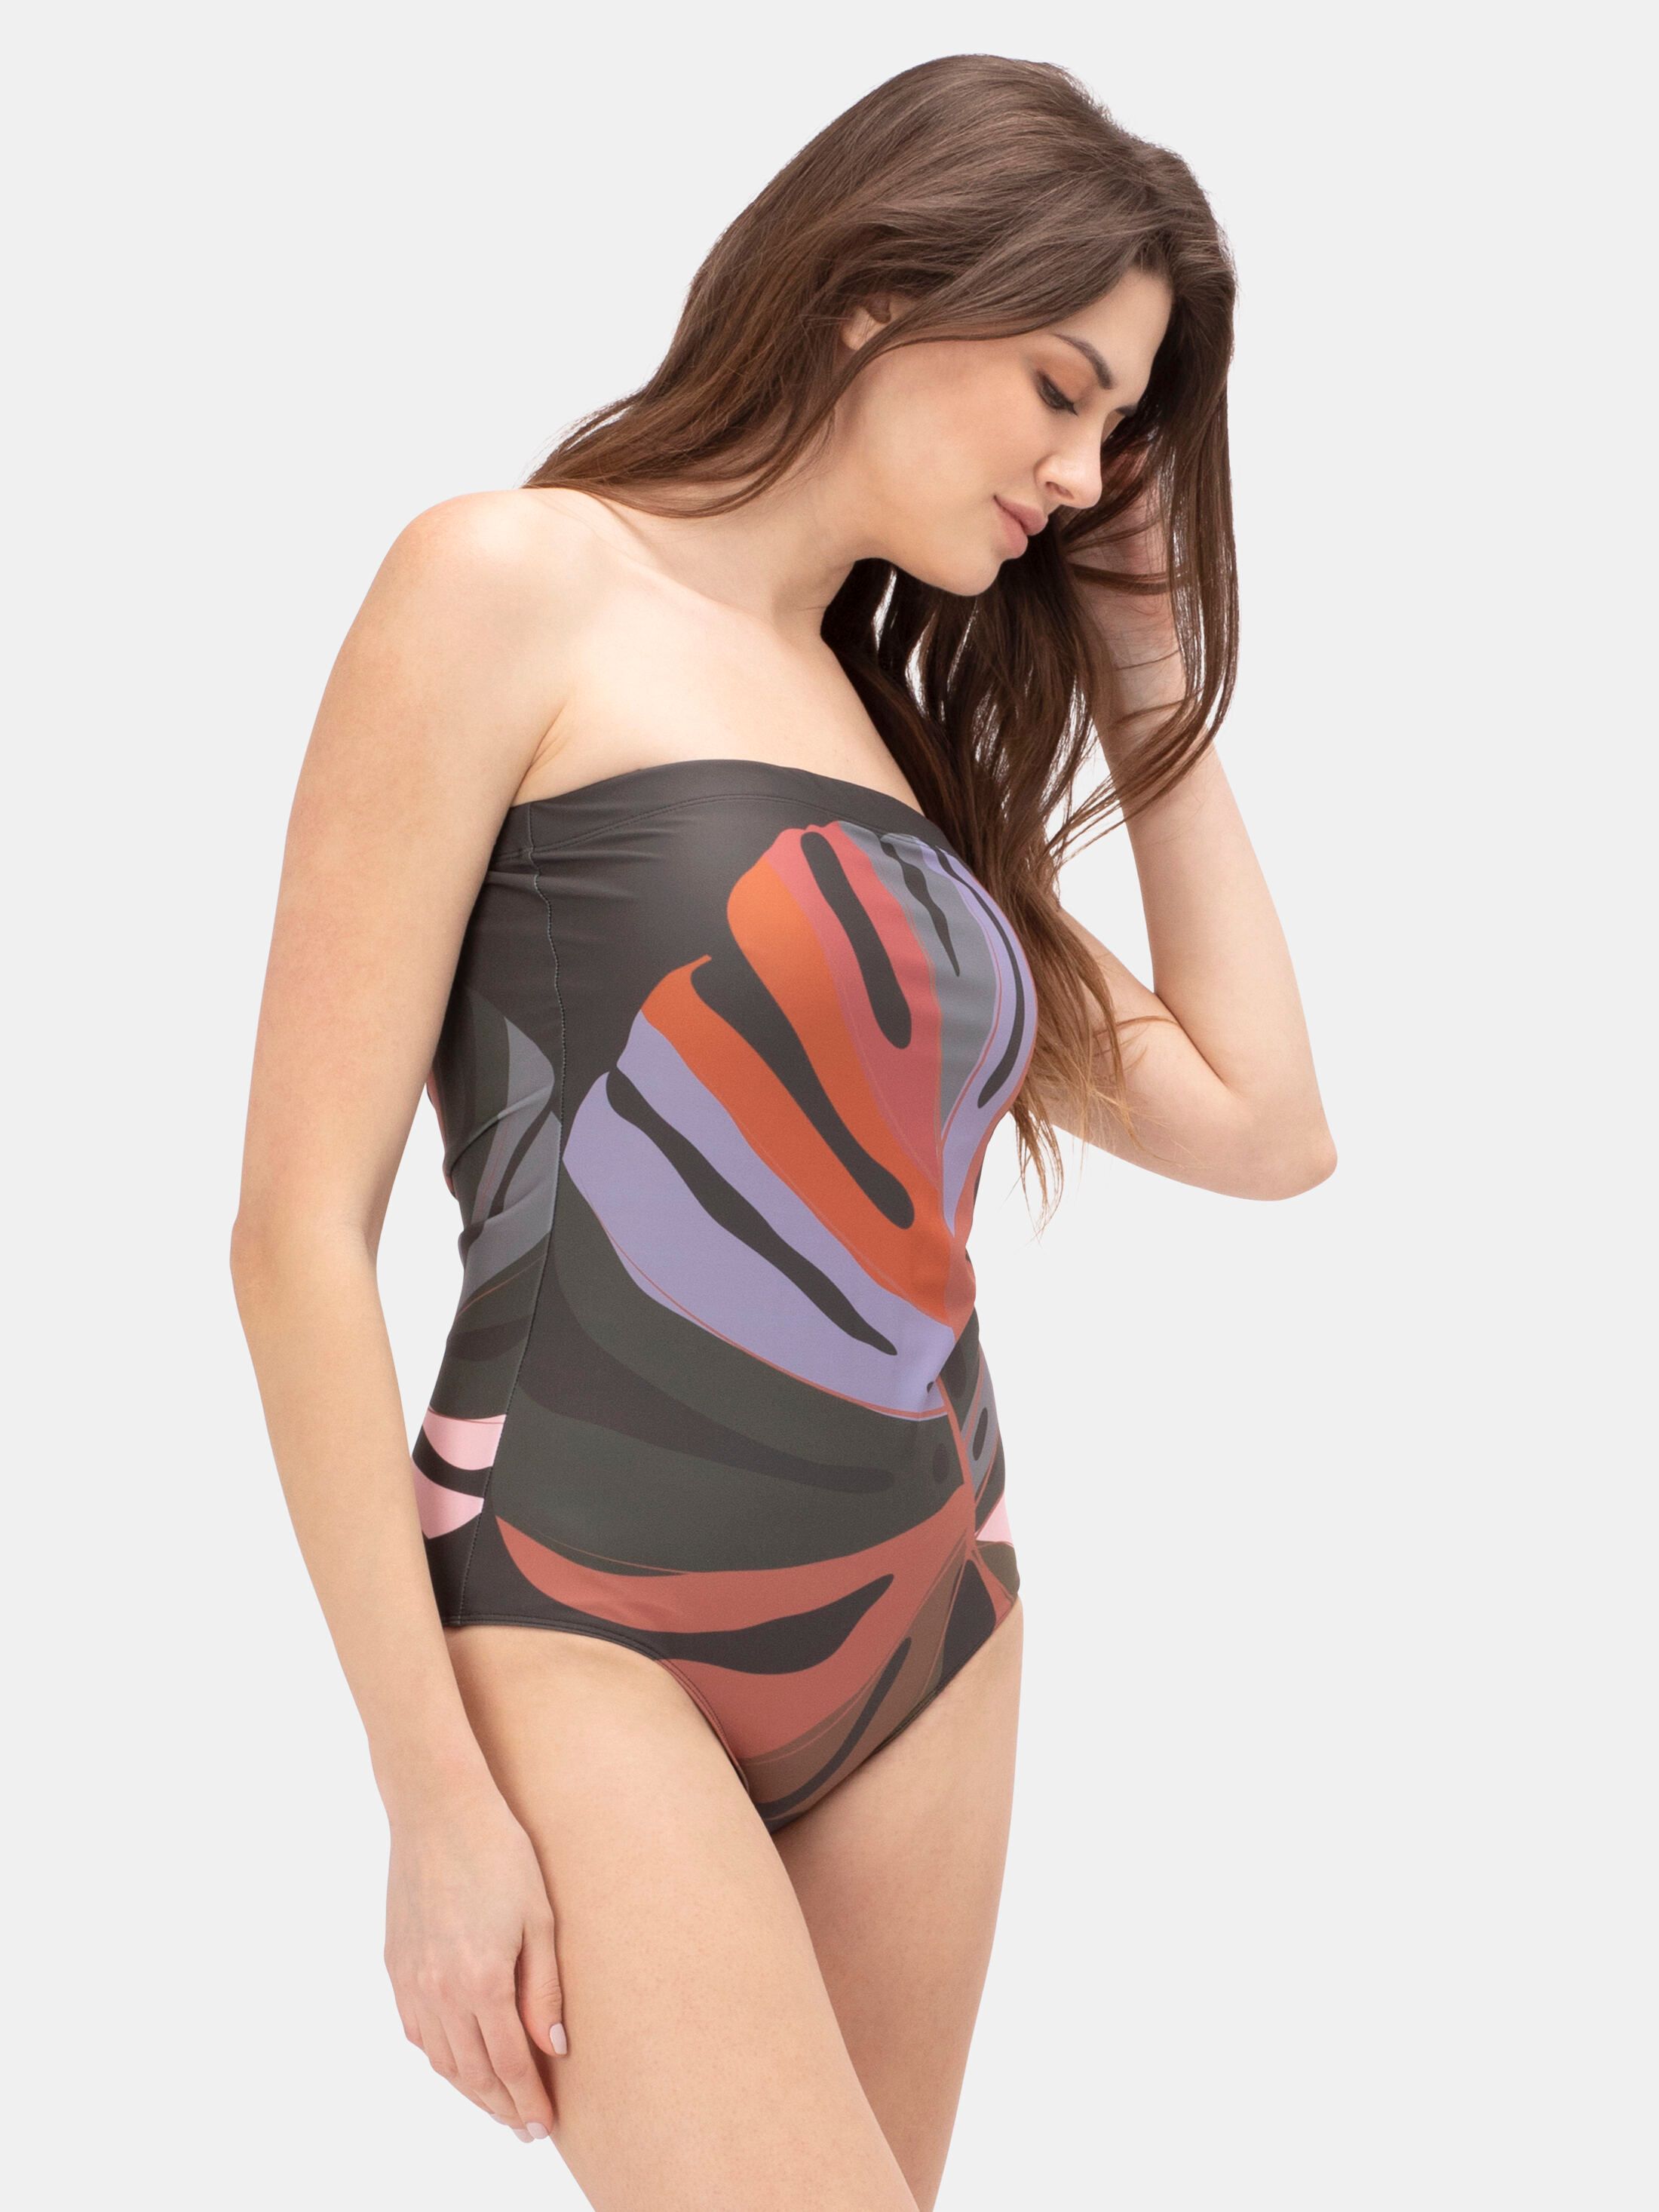 Customized Swimsuit